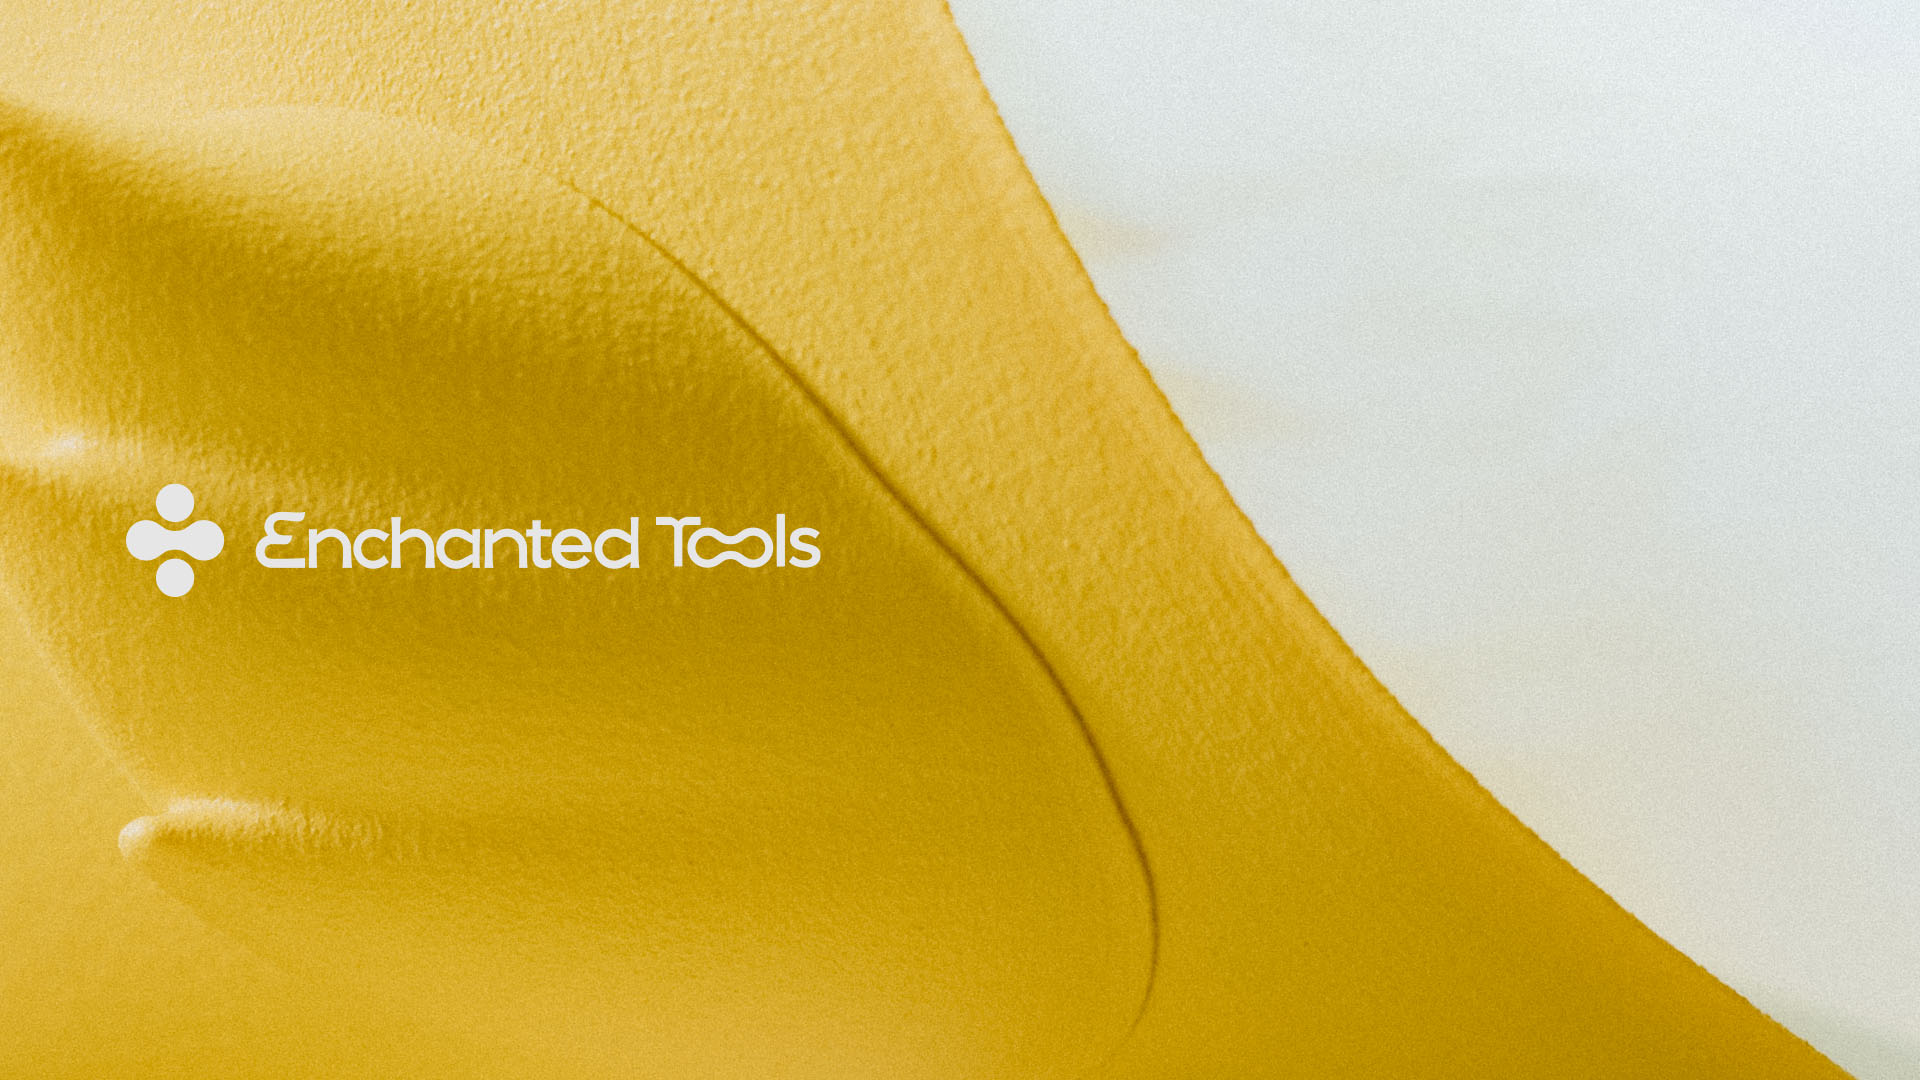 enchanted tools maison maj identité visuelle creation de logo photo6